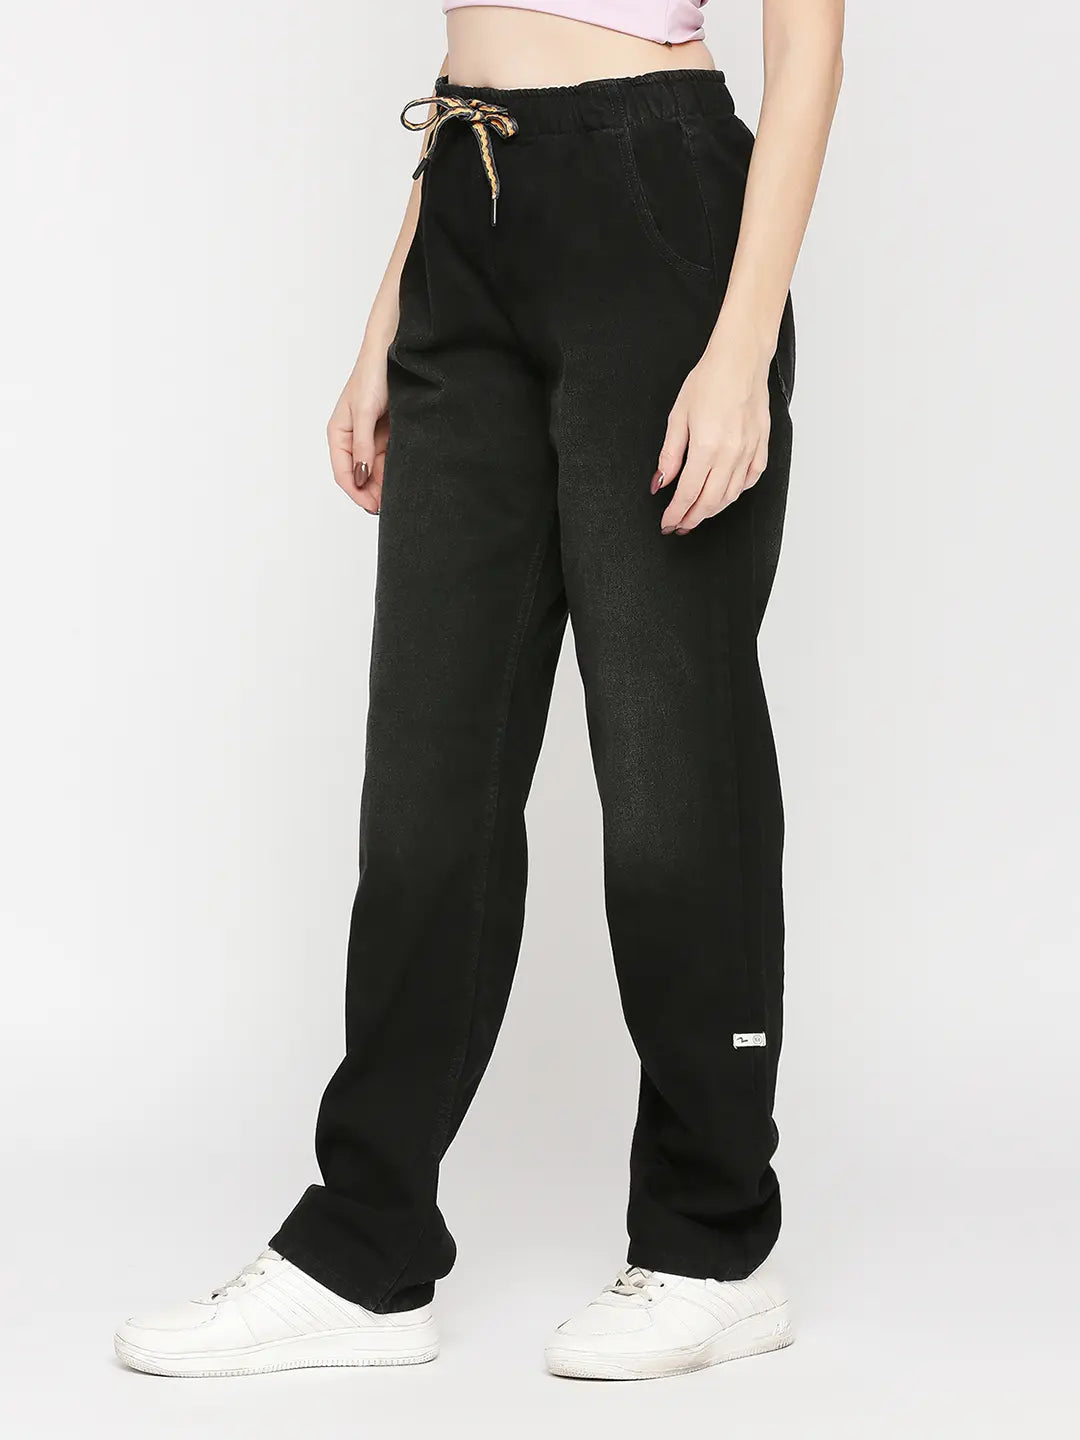 Spykar Women Black Cotton Straight Fit Regular Length Clean Look High Rise Jeans - (Bella)